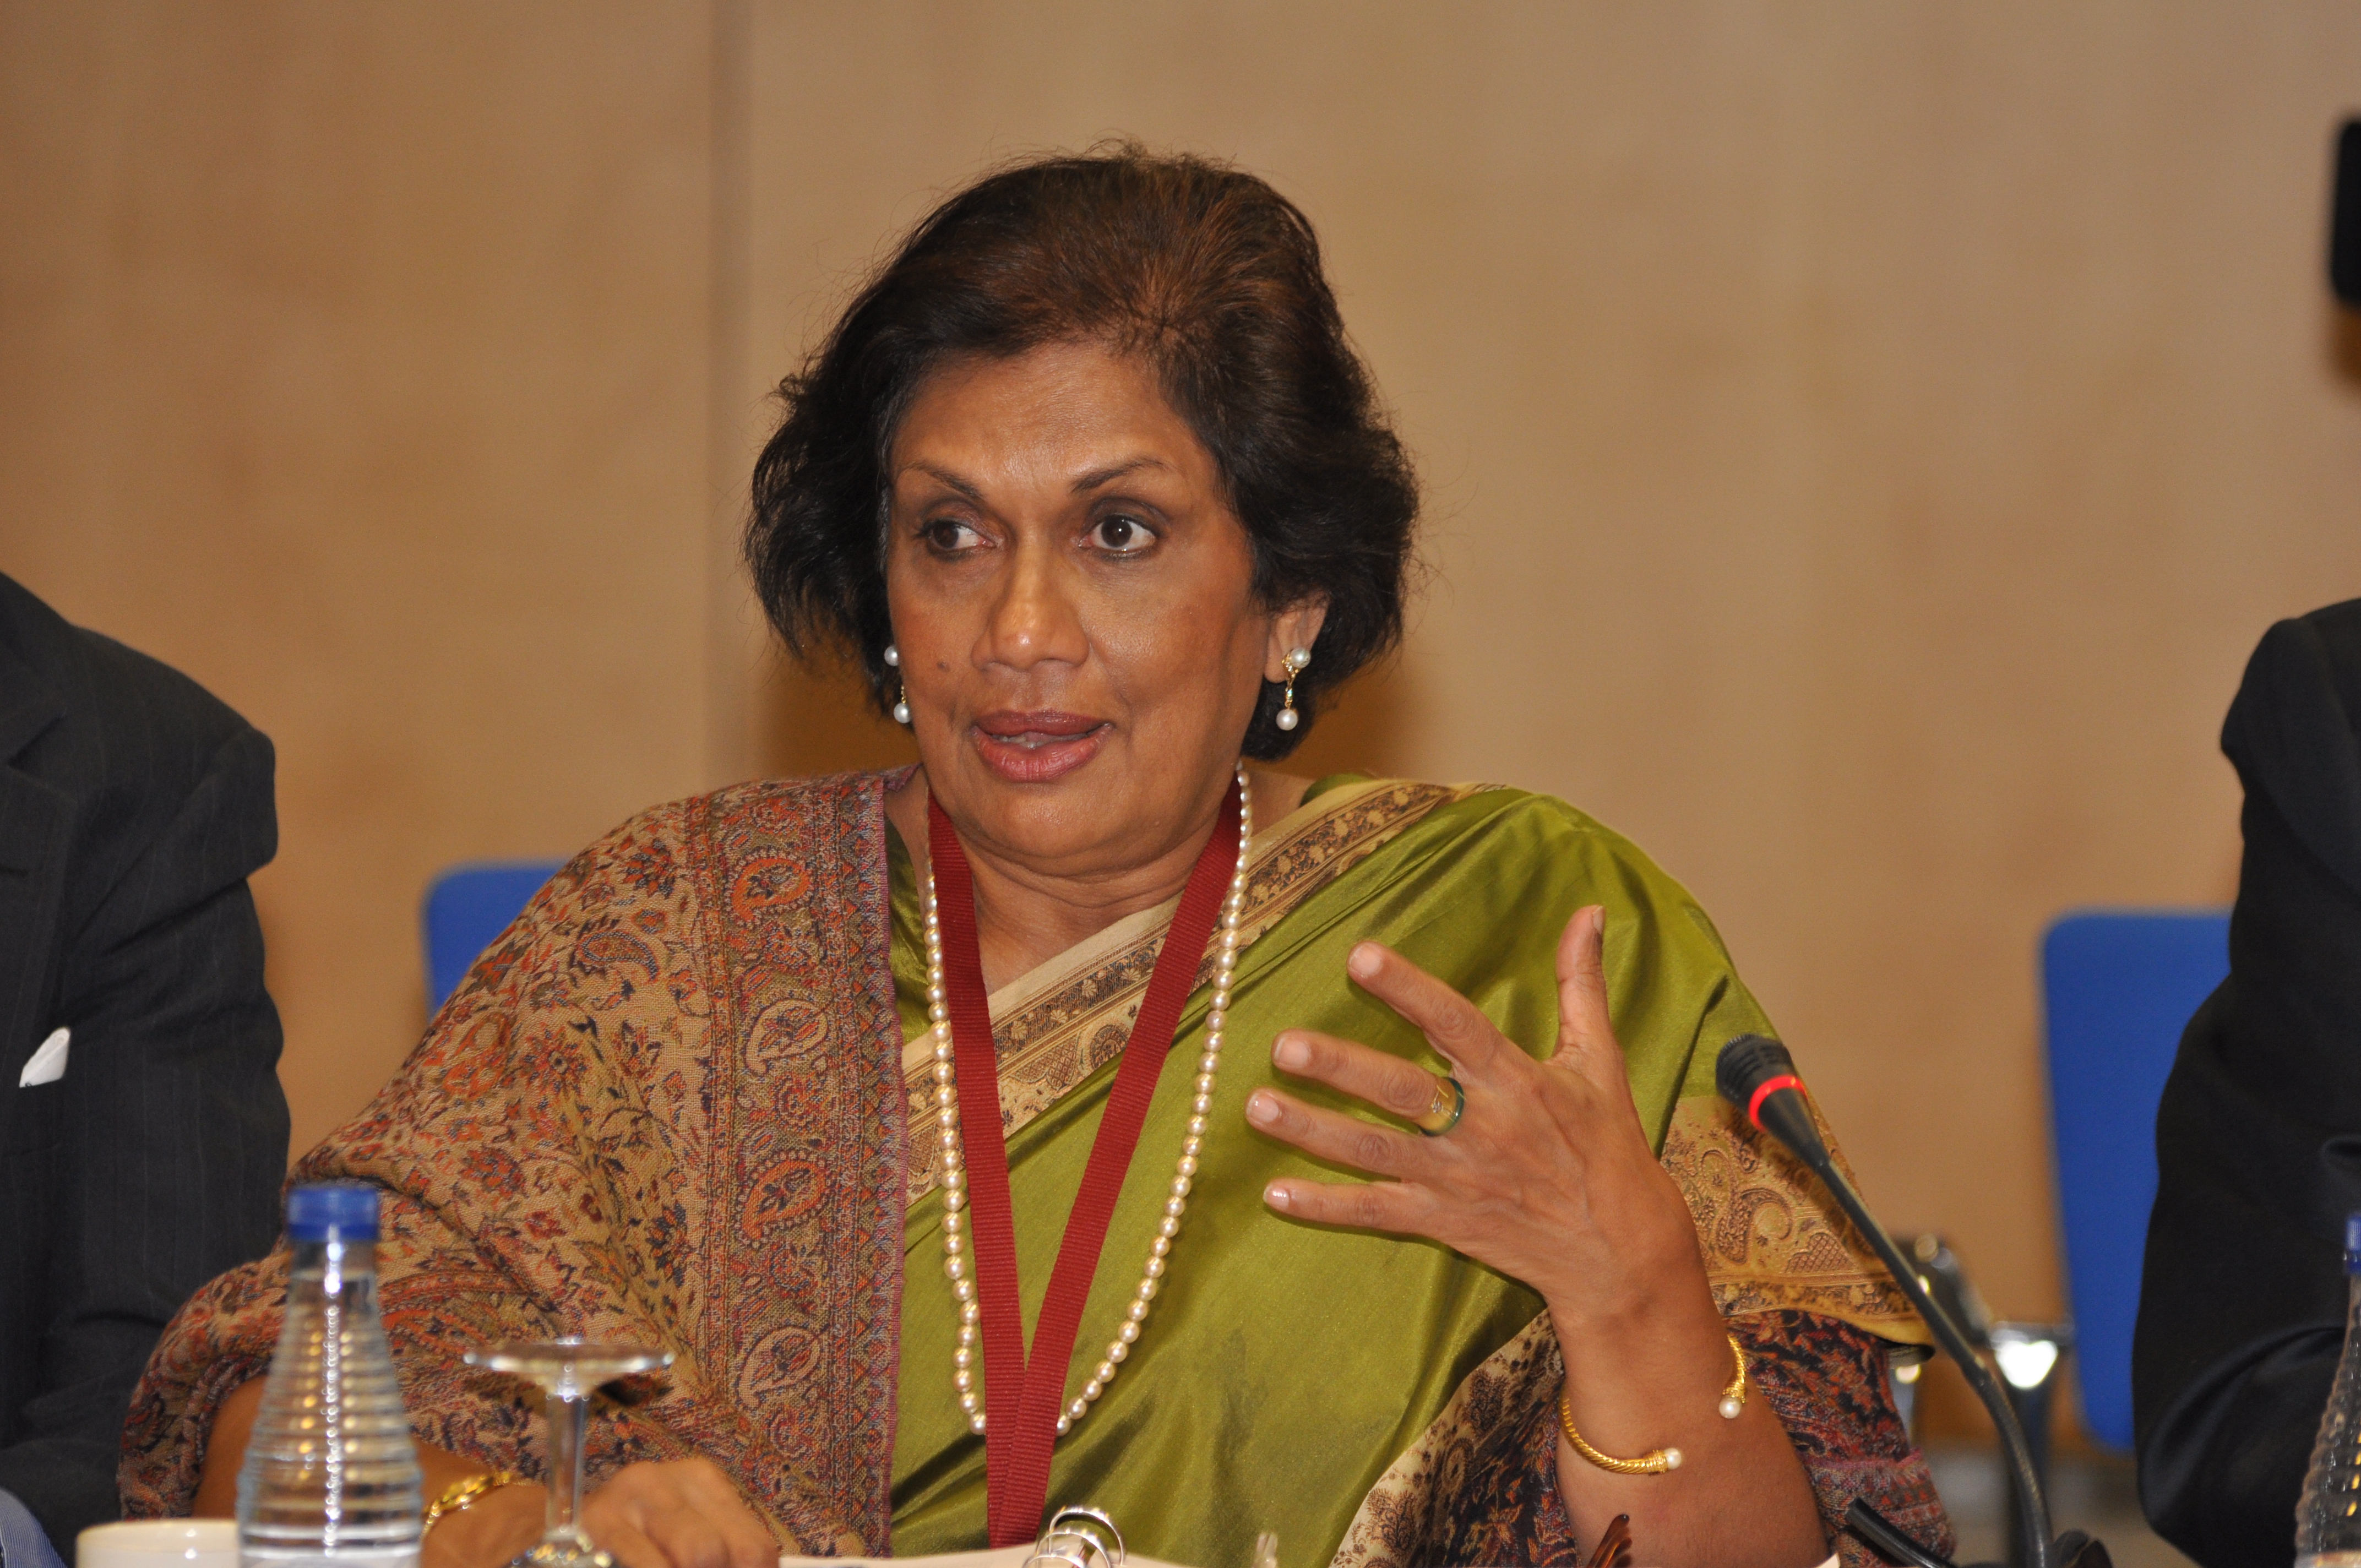 Statement by Member Chandrika Kumaratunga on the recent attacks in Sri Lanka